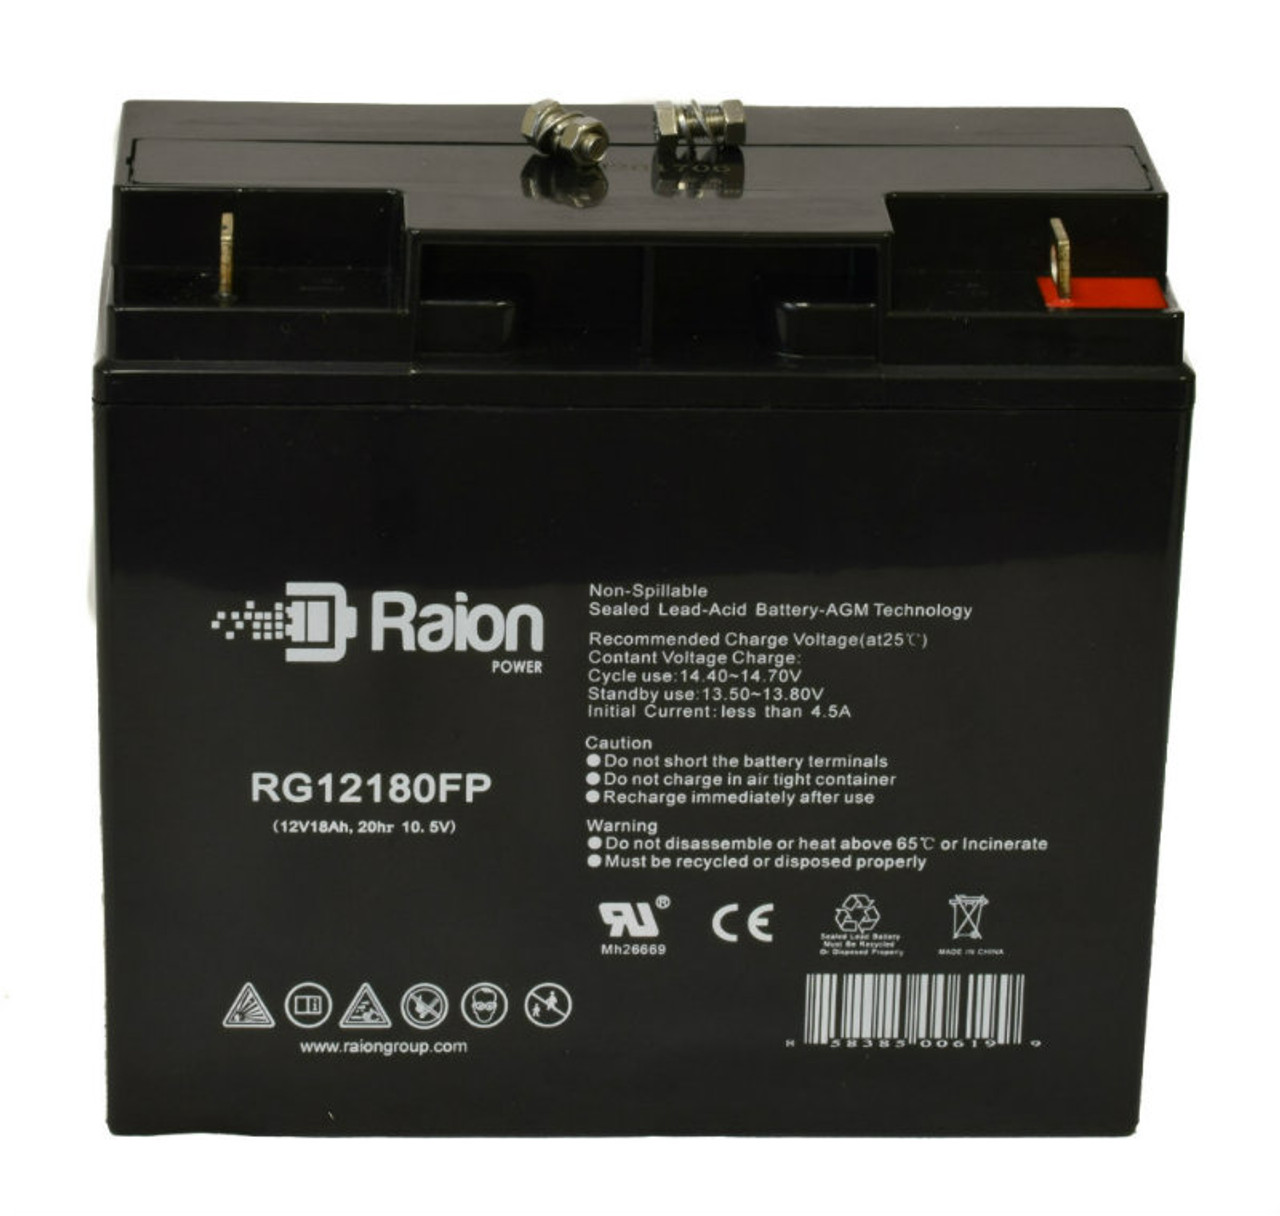 Raion Power RG12180FP 12V 18Ah Lead Acid Battery for Fun E-Cycle Three Wheeled E-Scooter 3WS